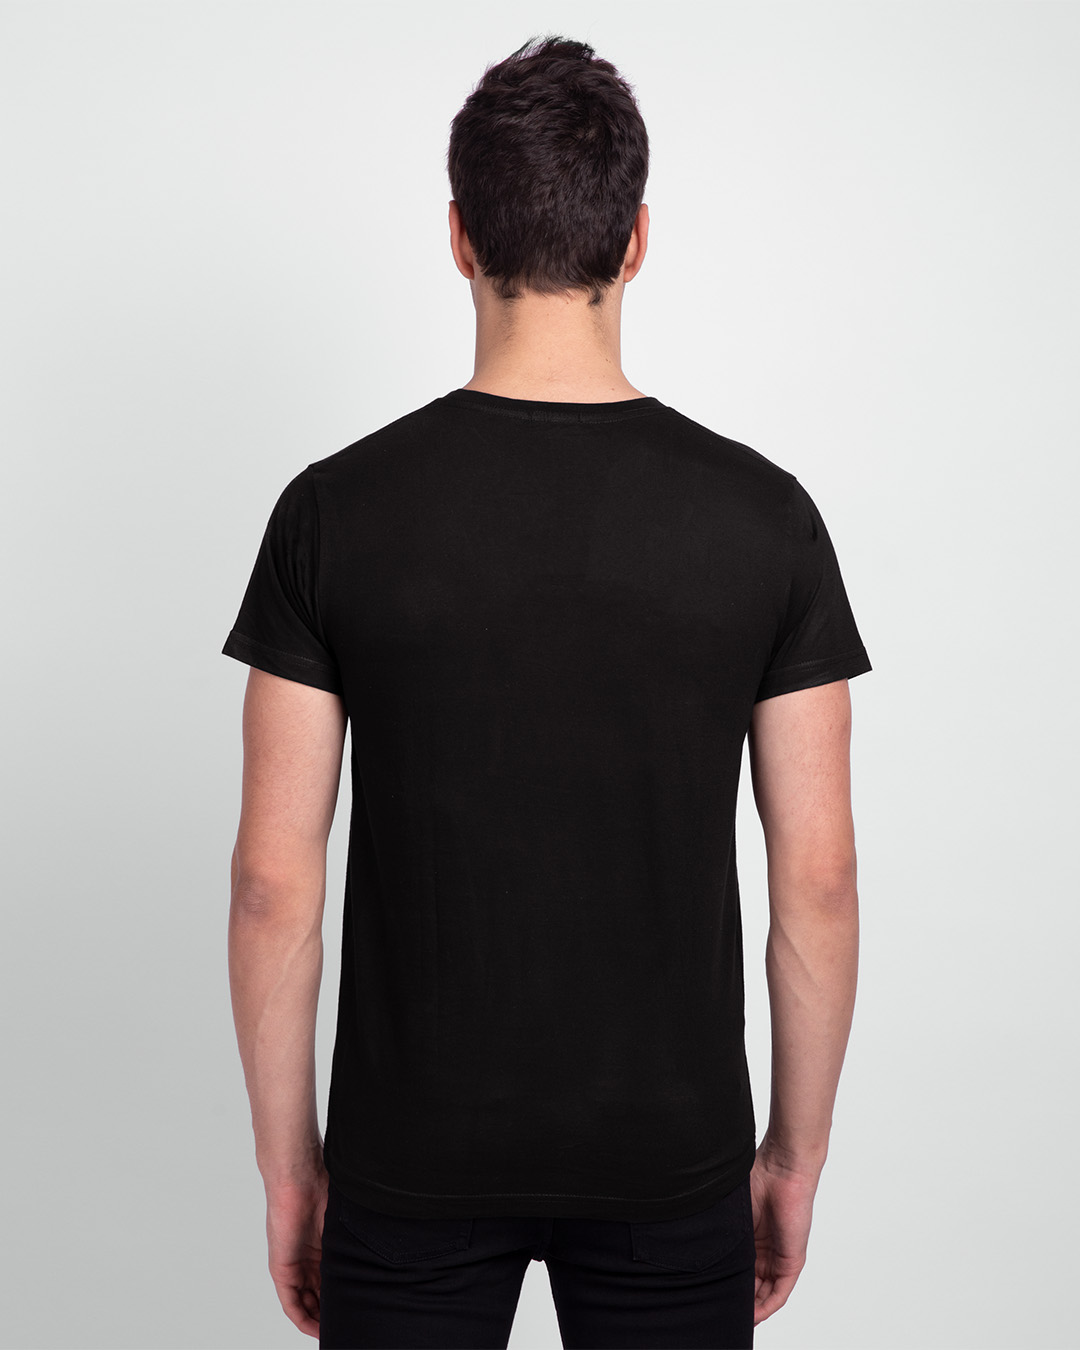 Shop Escape to outdoors Half Sleeve T-Shirt Black-Back